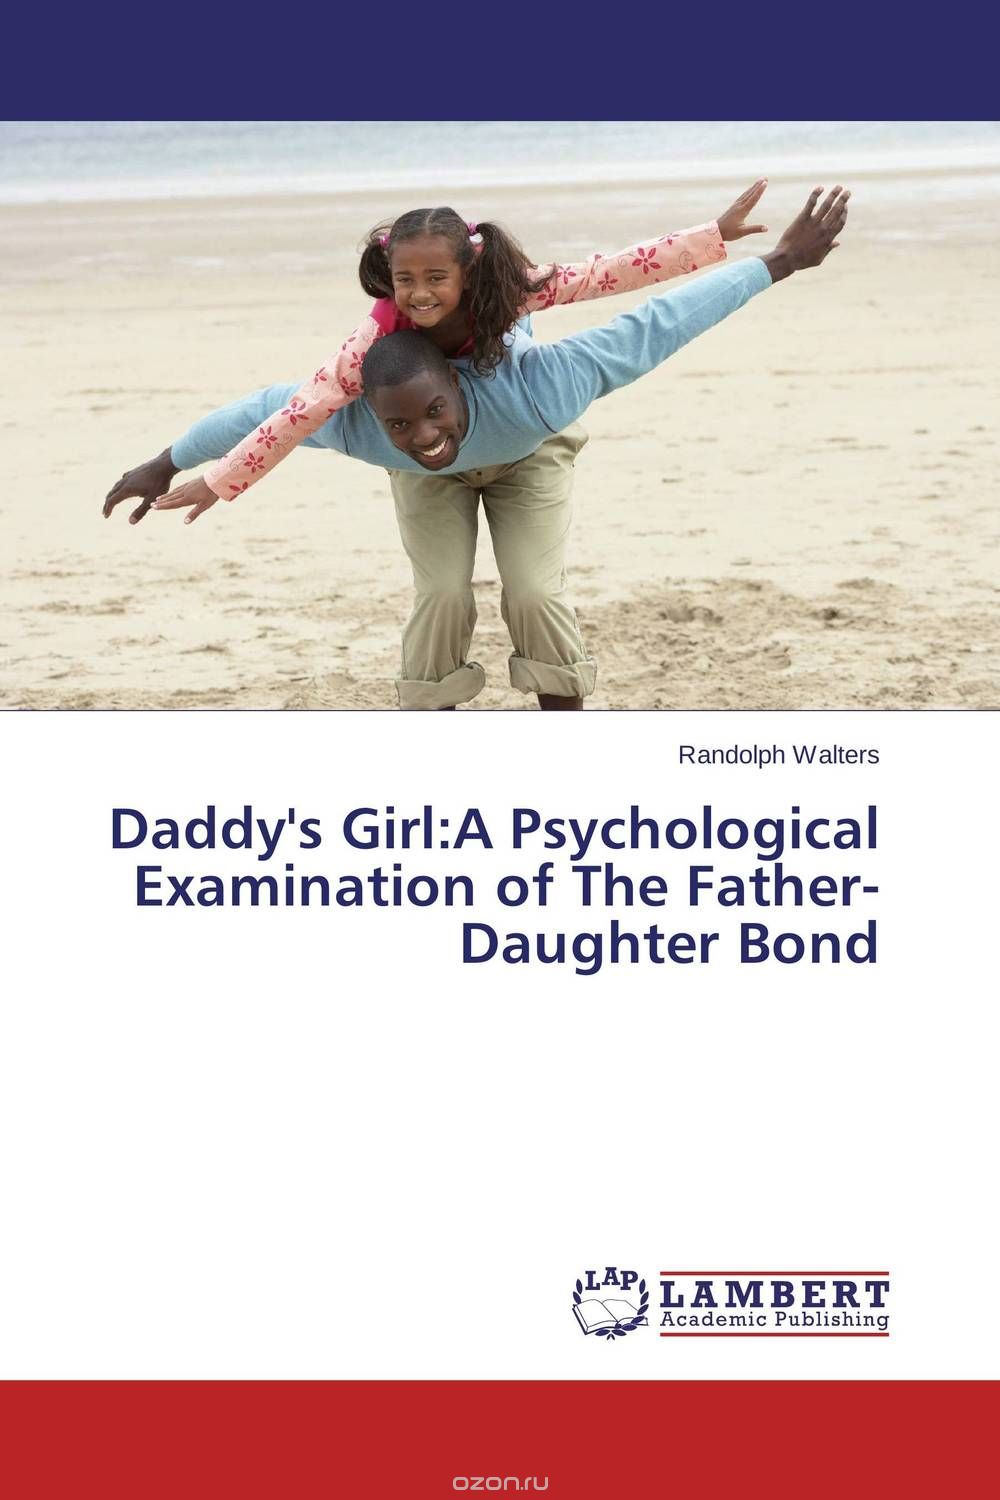 Скачать книгу "Daddy's Girl:A Psychological Examination of The Father-Daughter Bond"